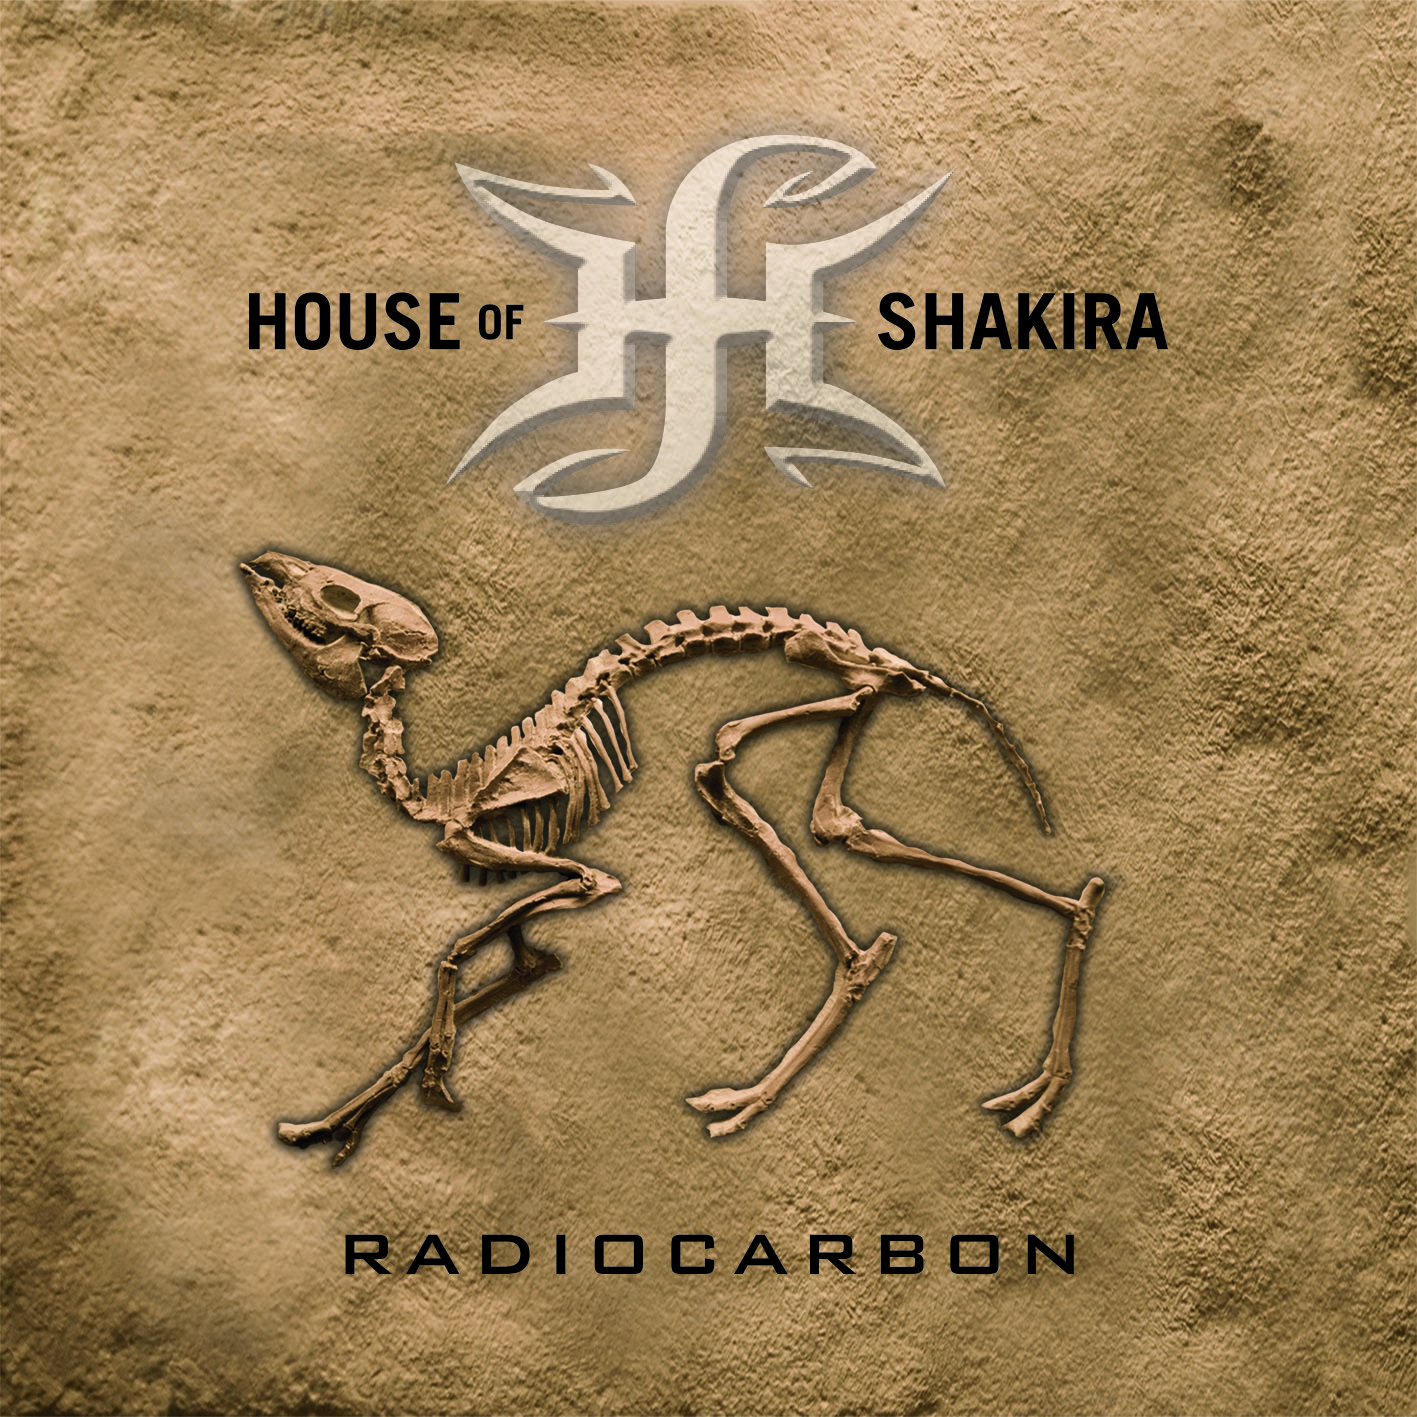 HOUSE OF SHAKIRA - “Radiocarbon”